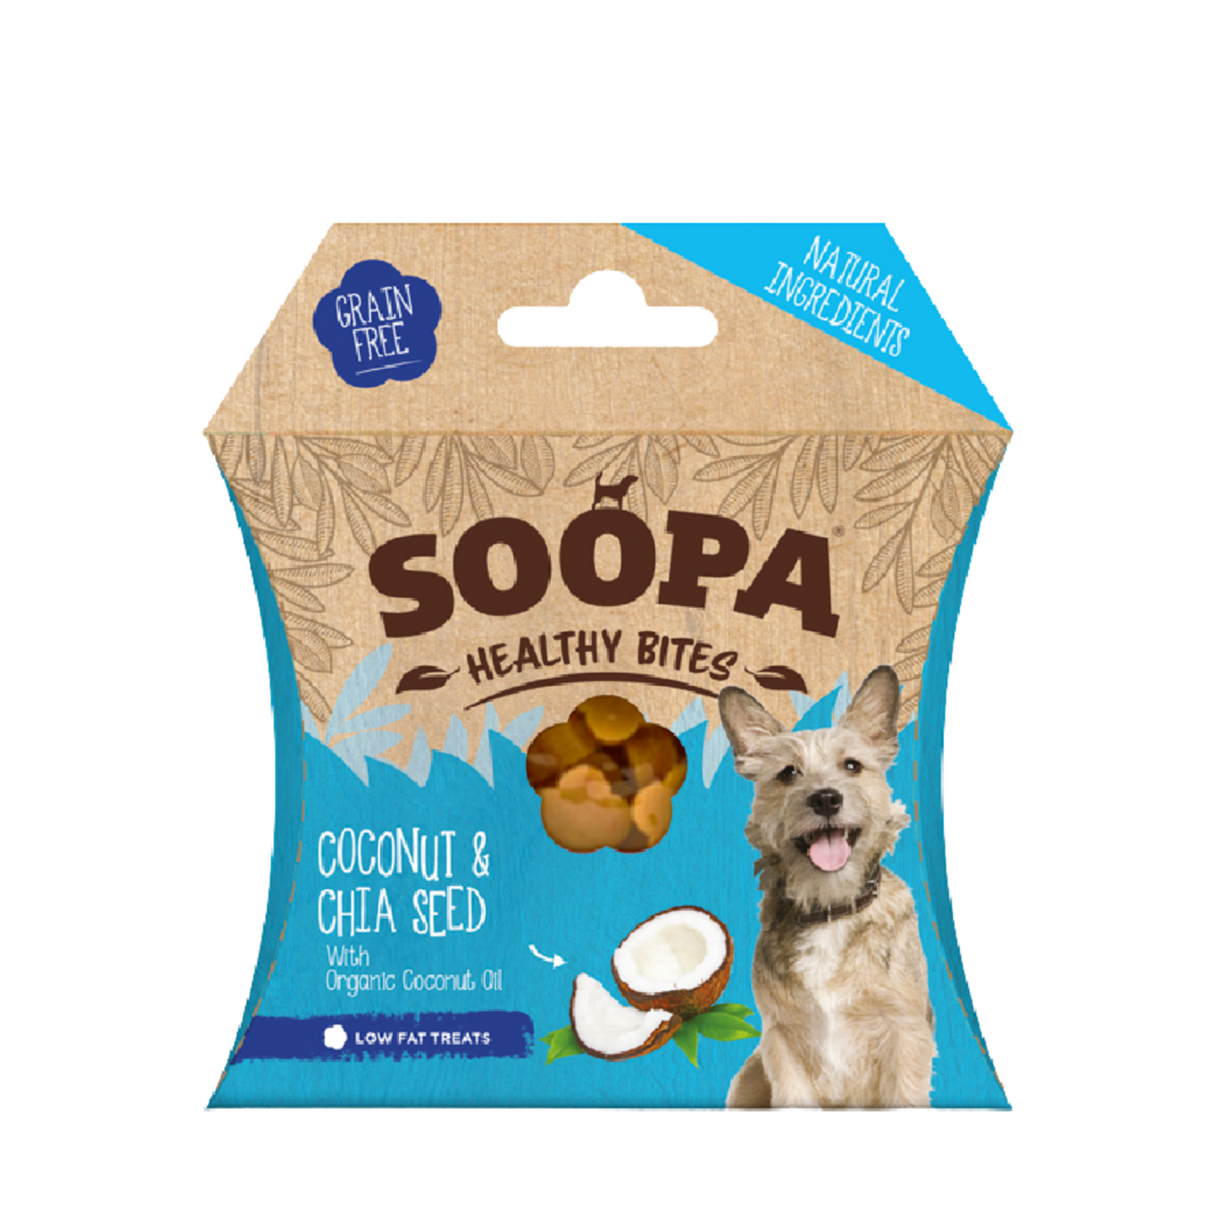 Soopa Coconut & Chia Seed Healthy Bites